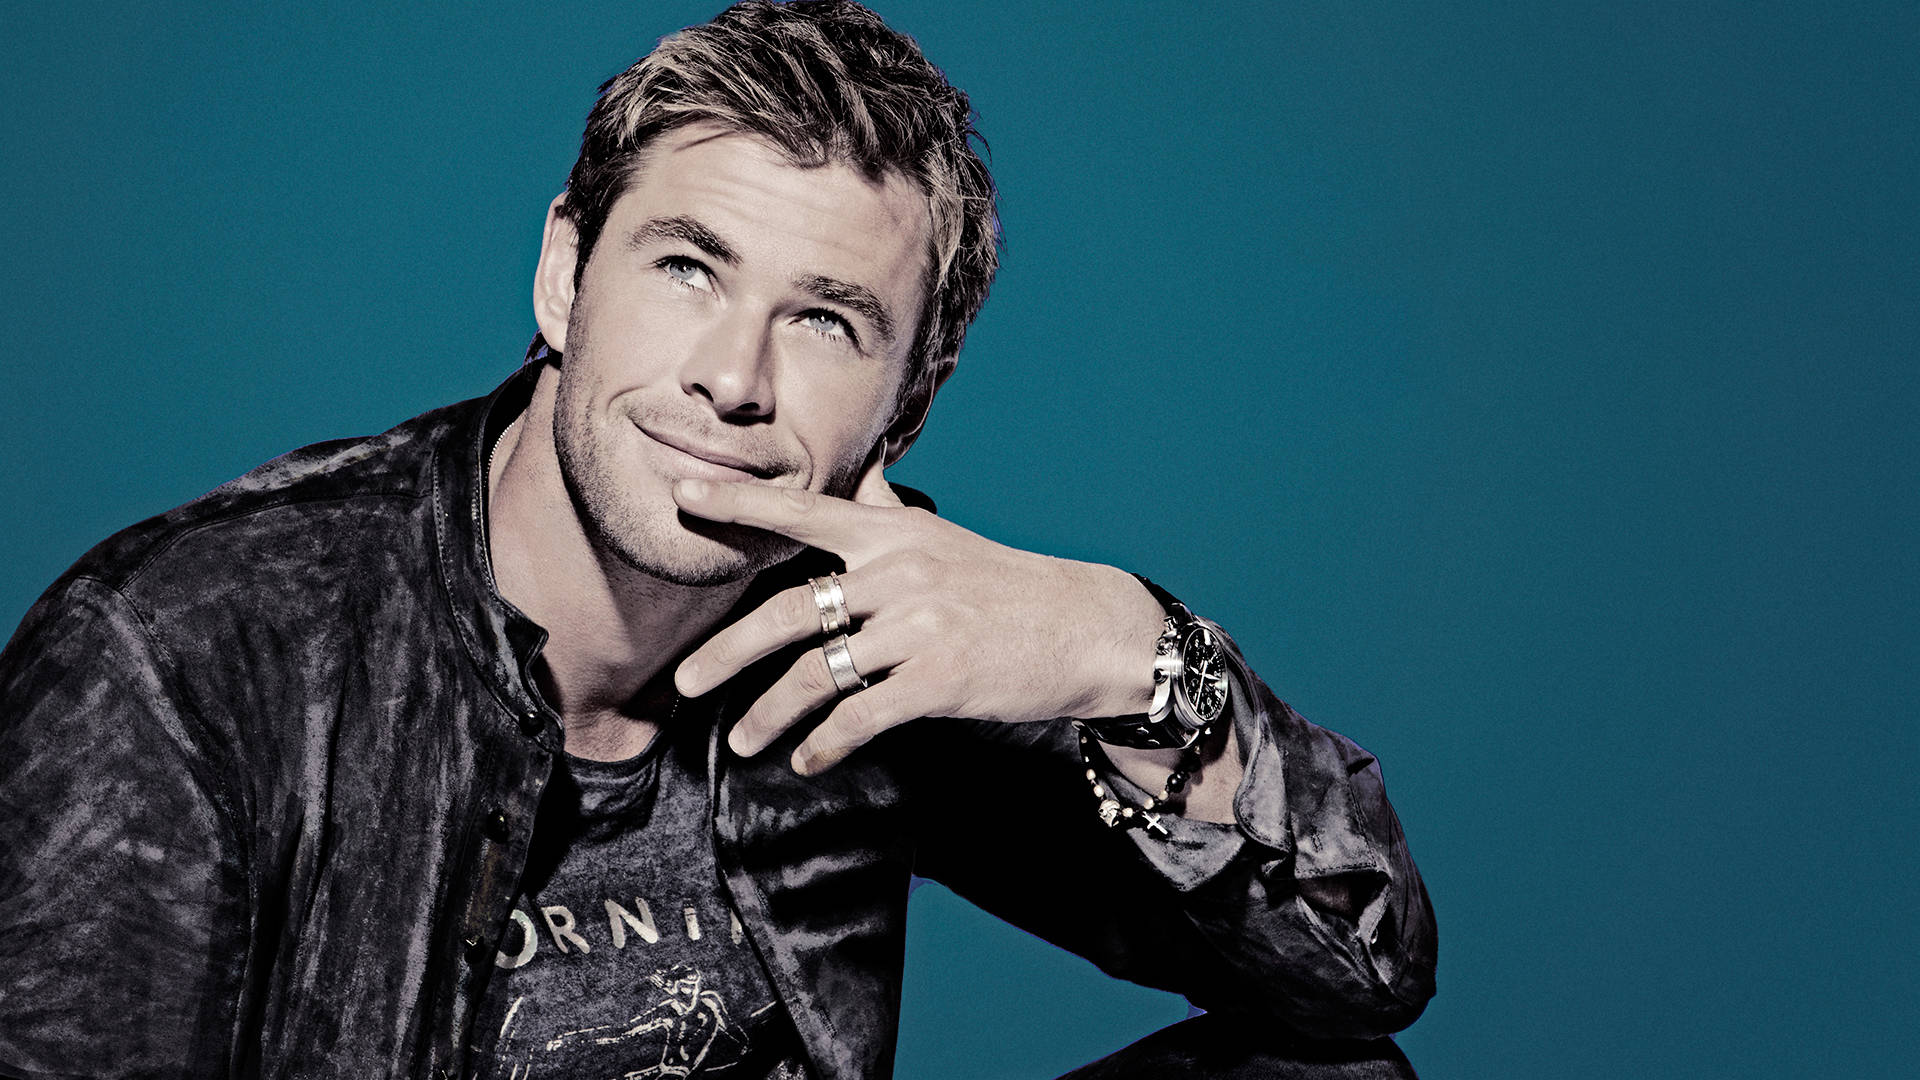 Chris Hemsworth In Leather Jacket Wallpaper